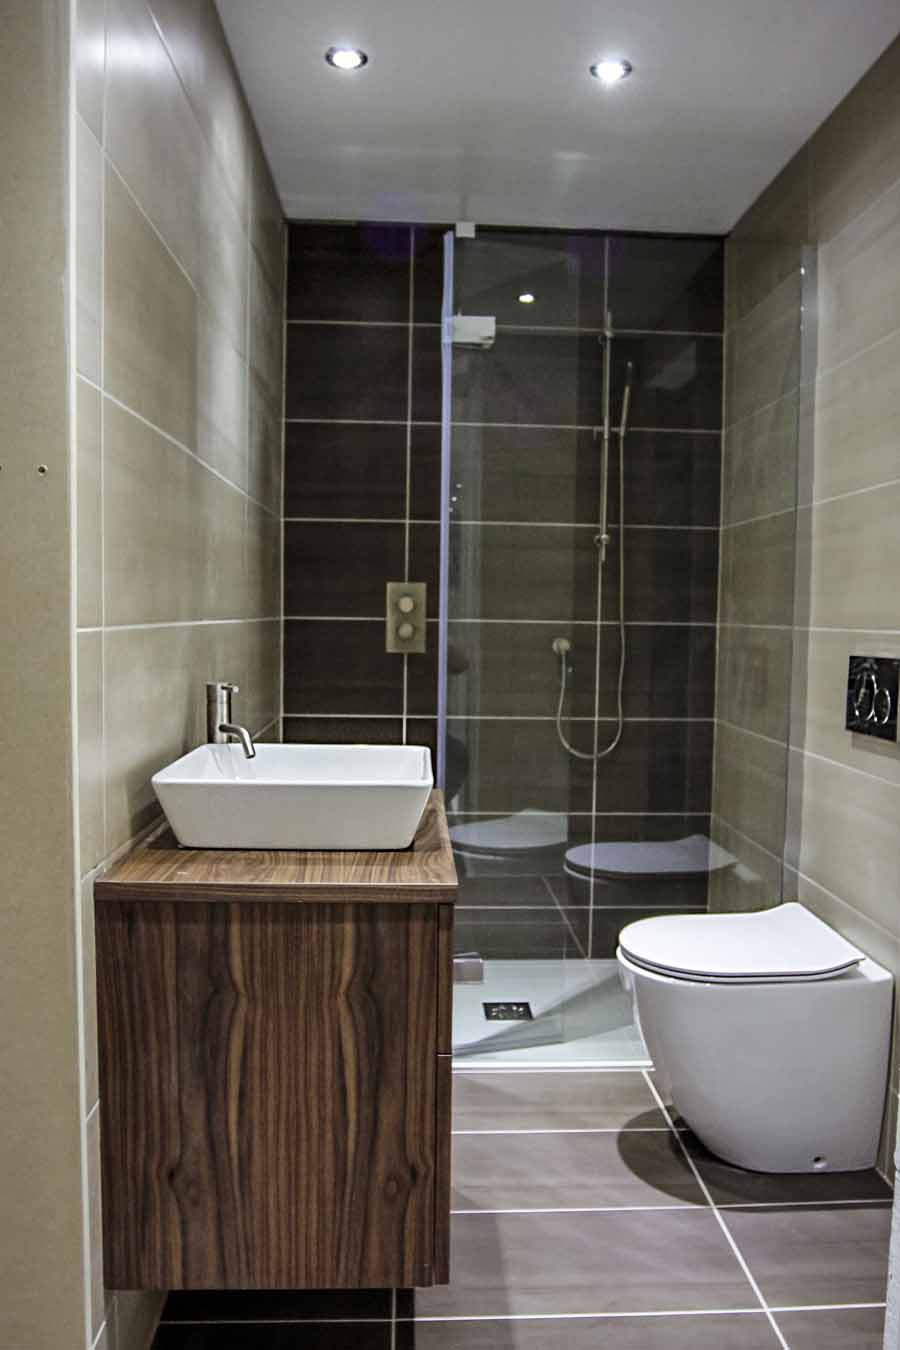 Bathroom Tile Showrooms
 New Dorset Bathroom & Tiles Showroom for Room H2o